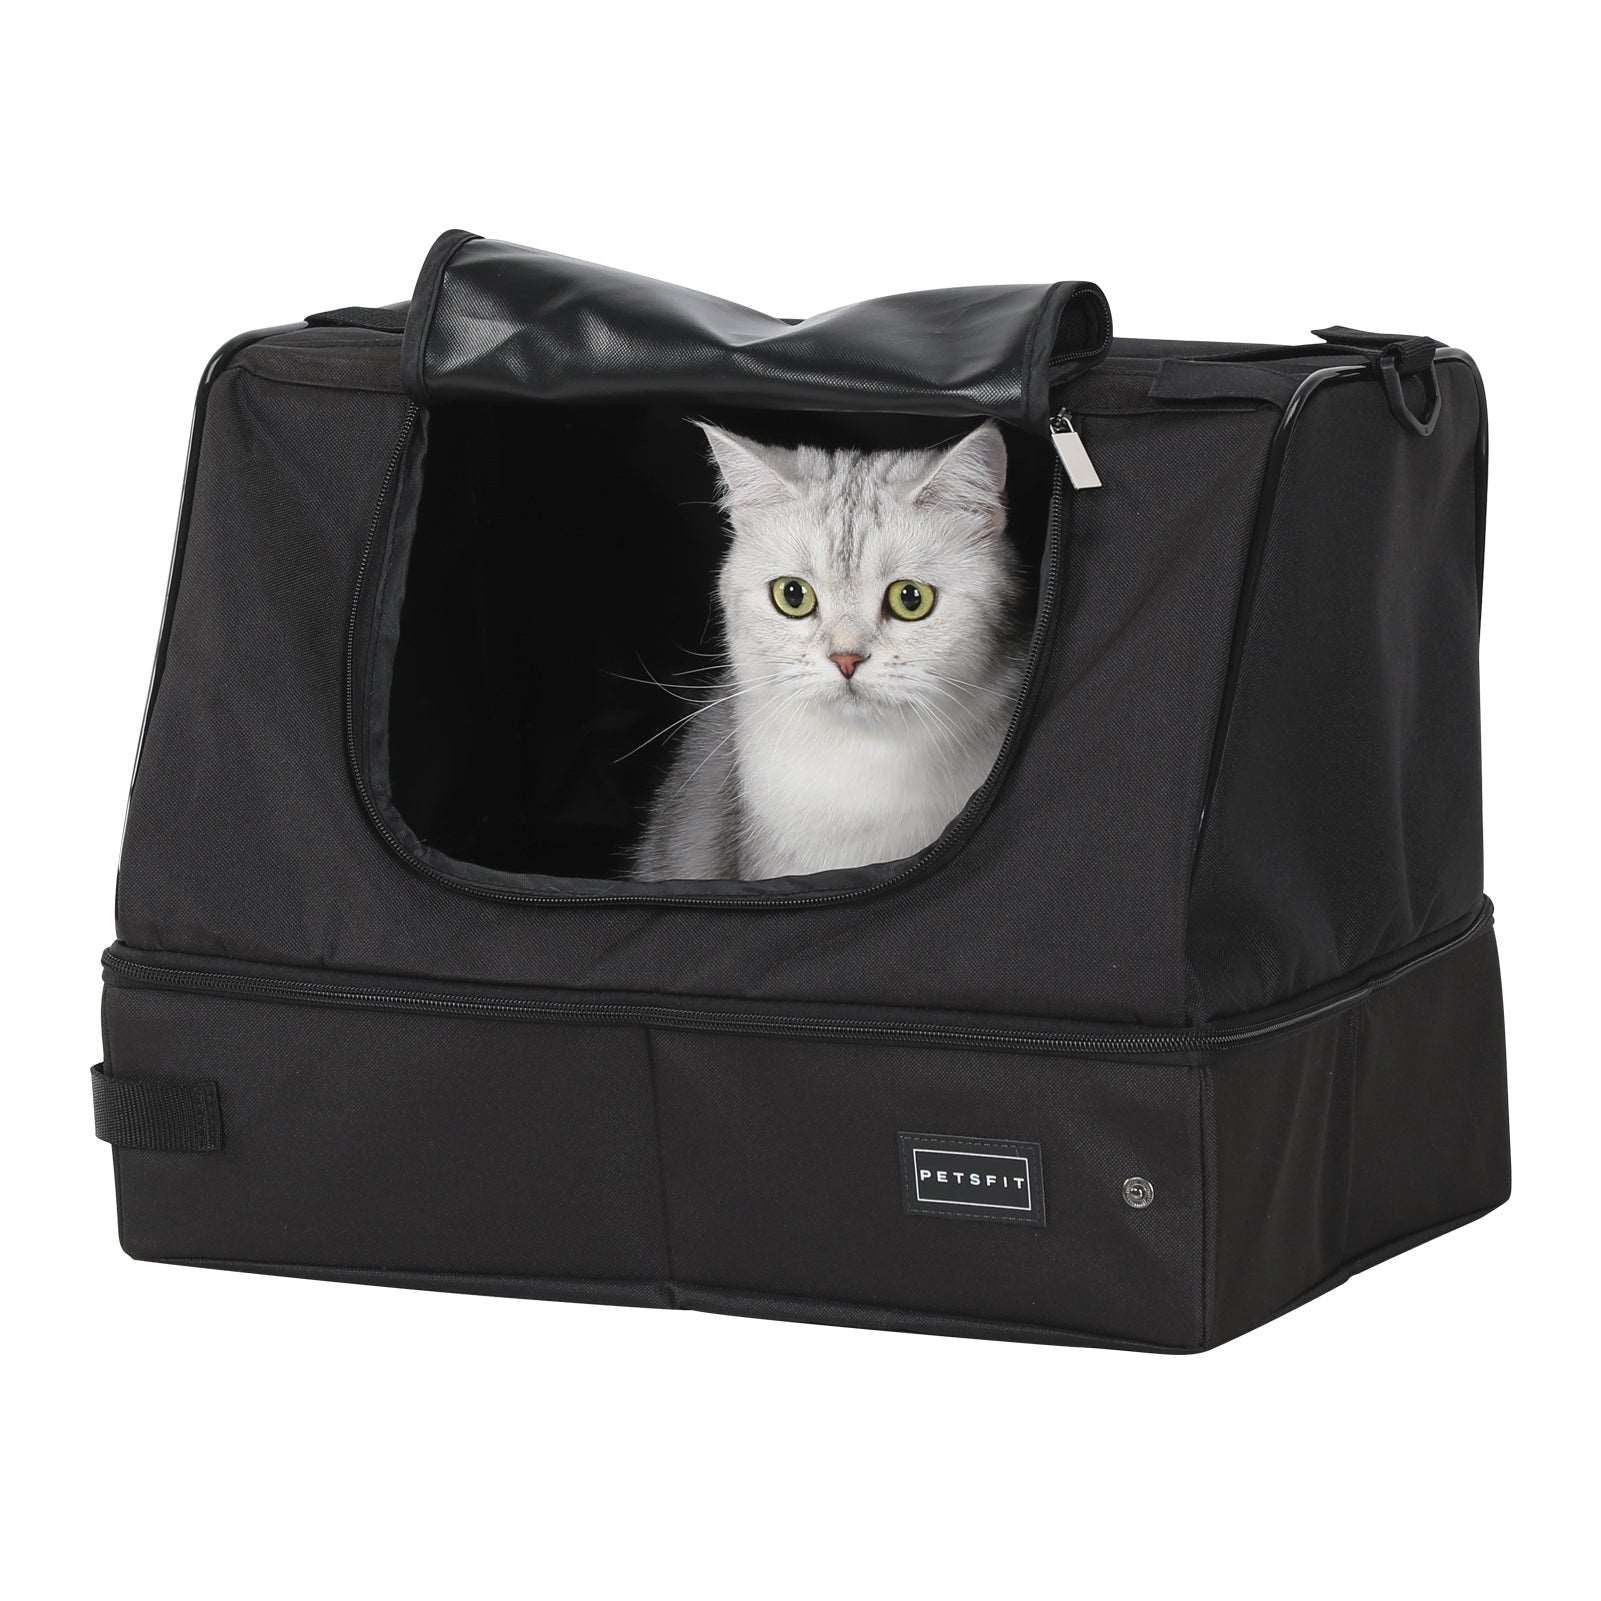 Petsfit-Upgrade-Portable-Travel-Cat-Litter-Box-01